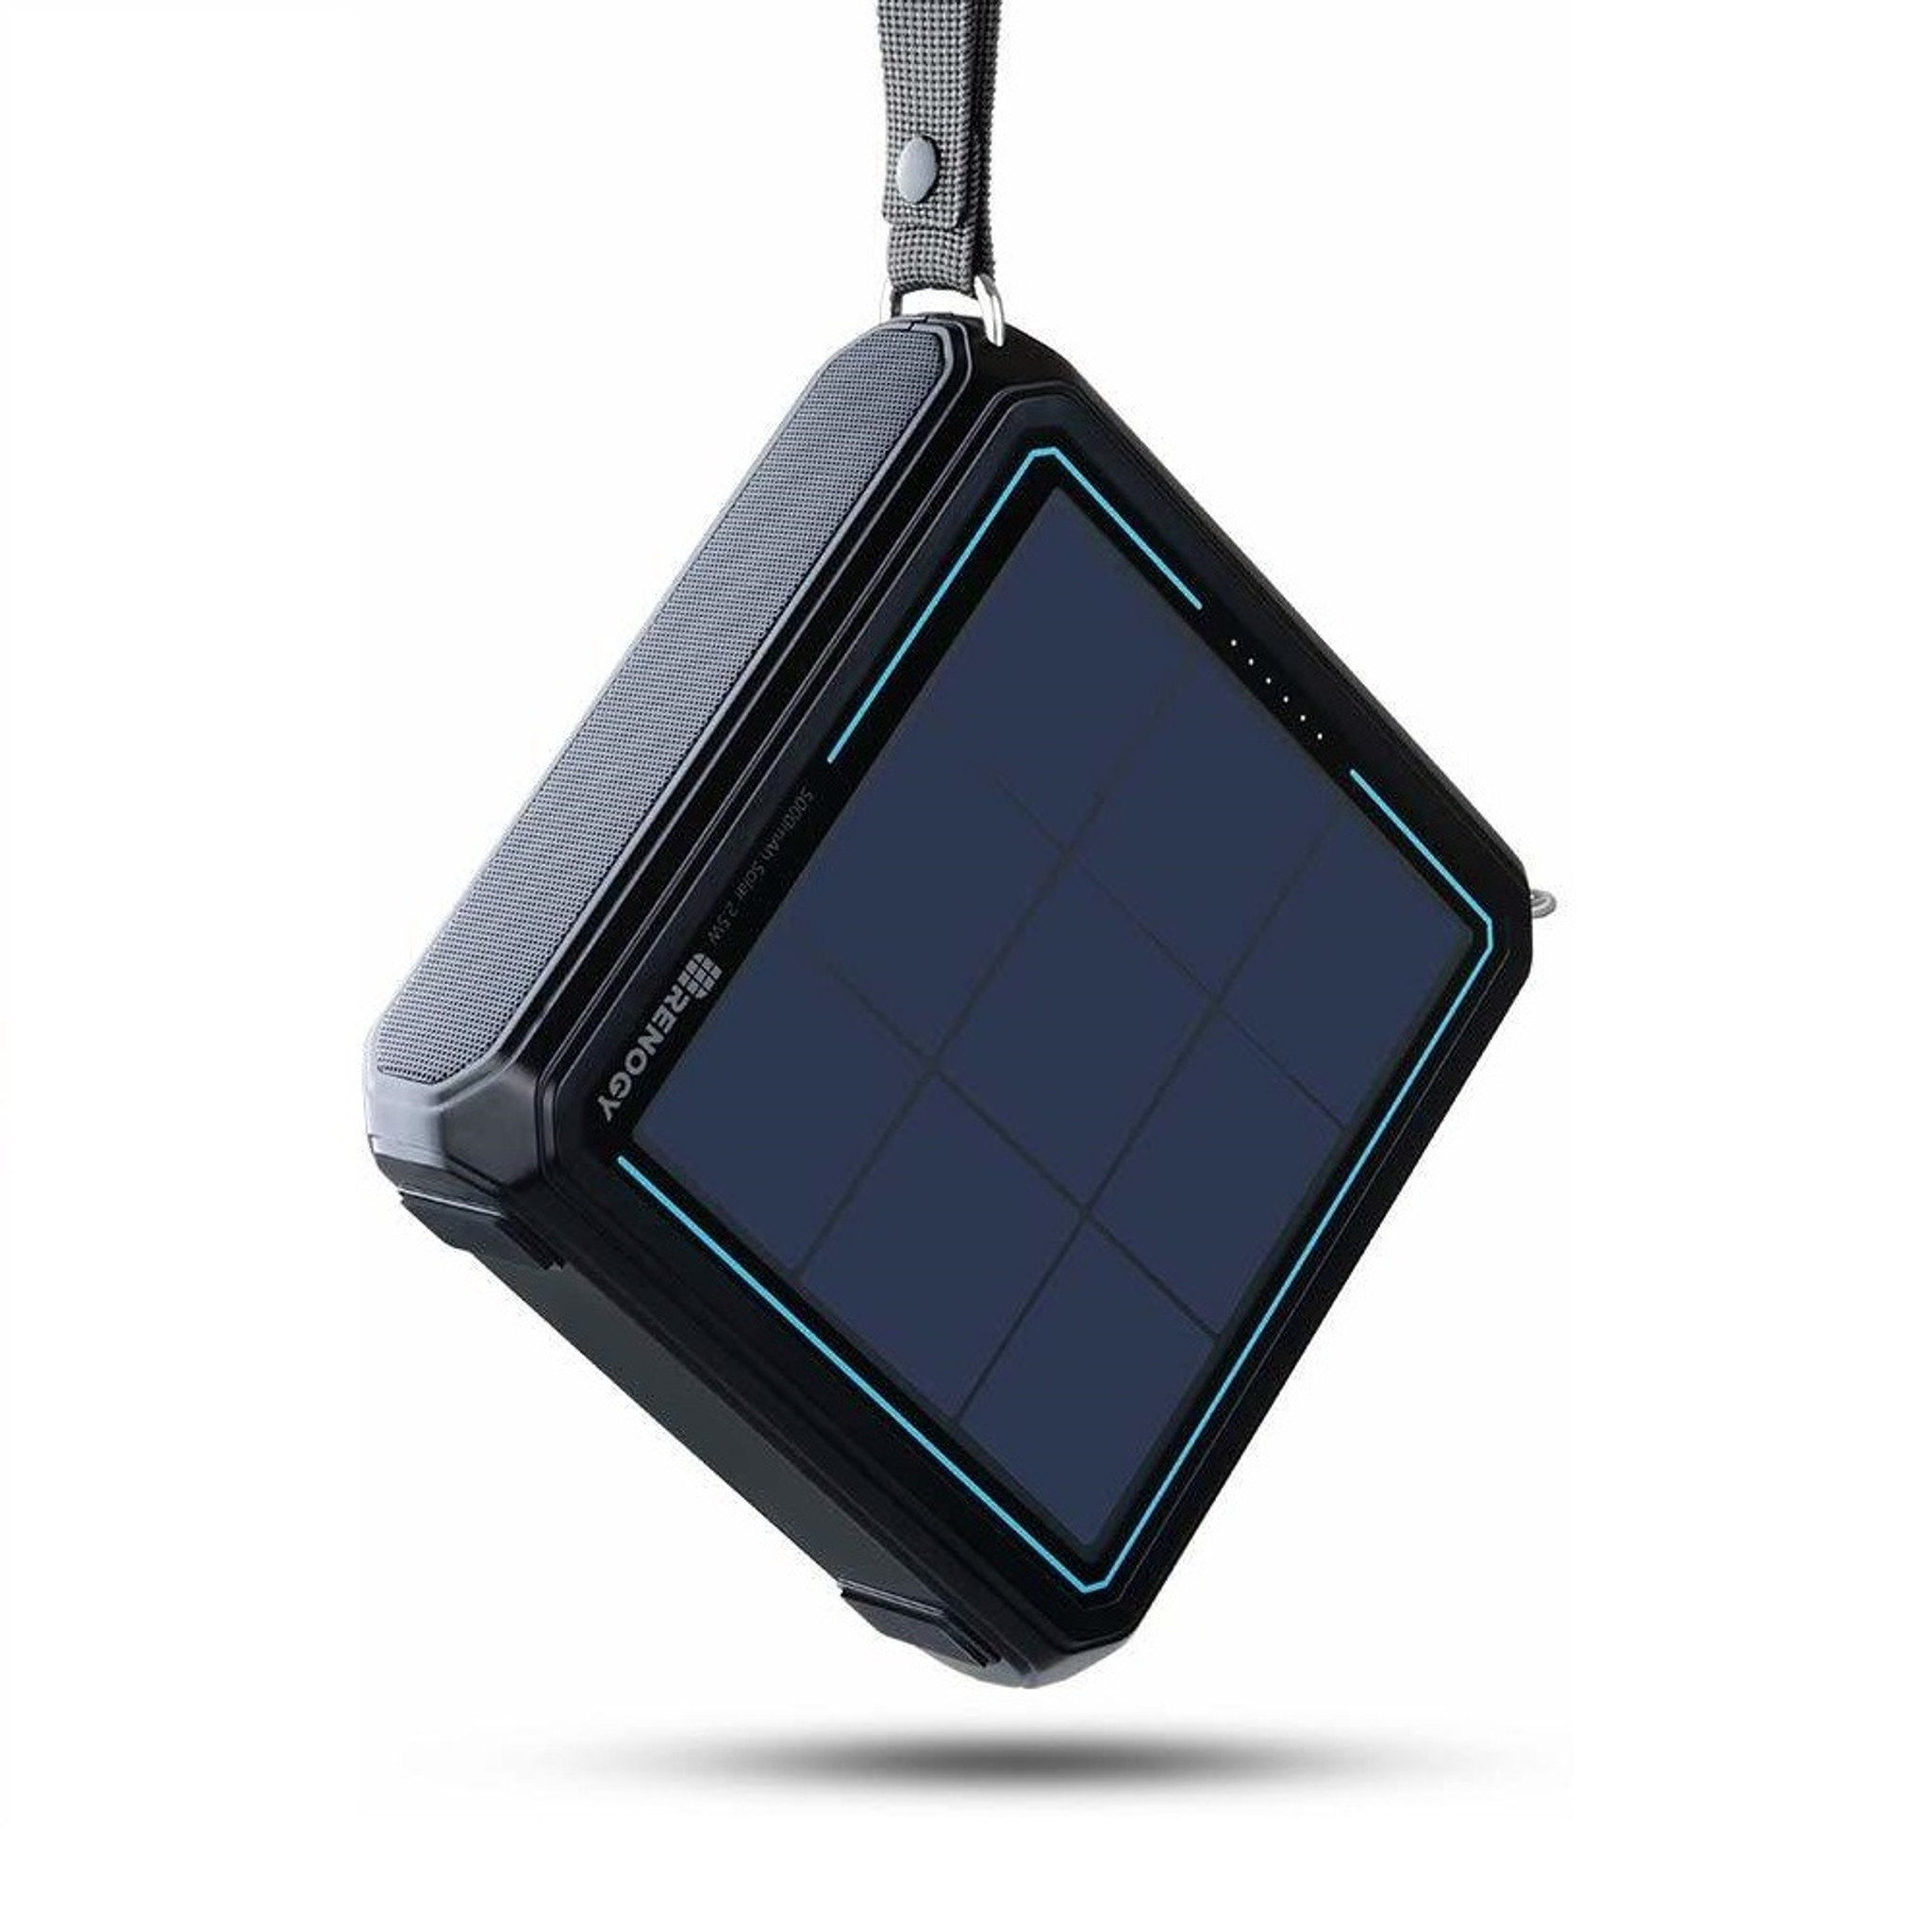 solar powered outdoor bluetooth speakers